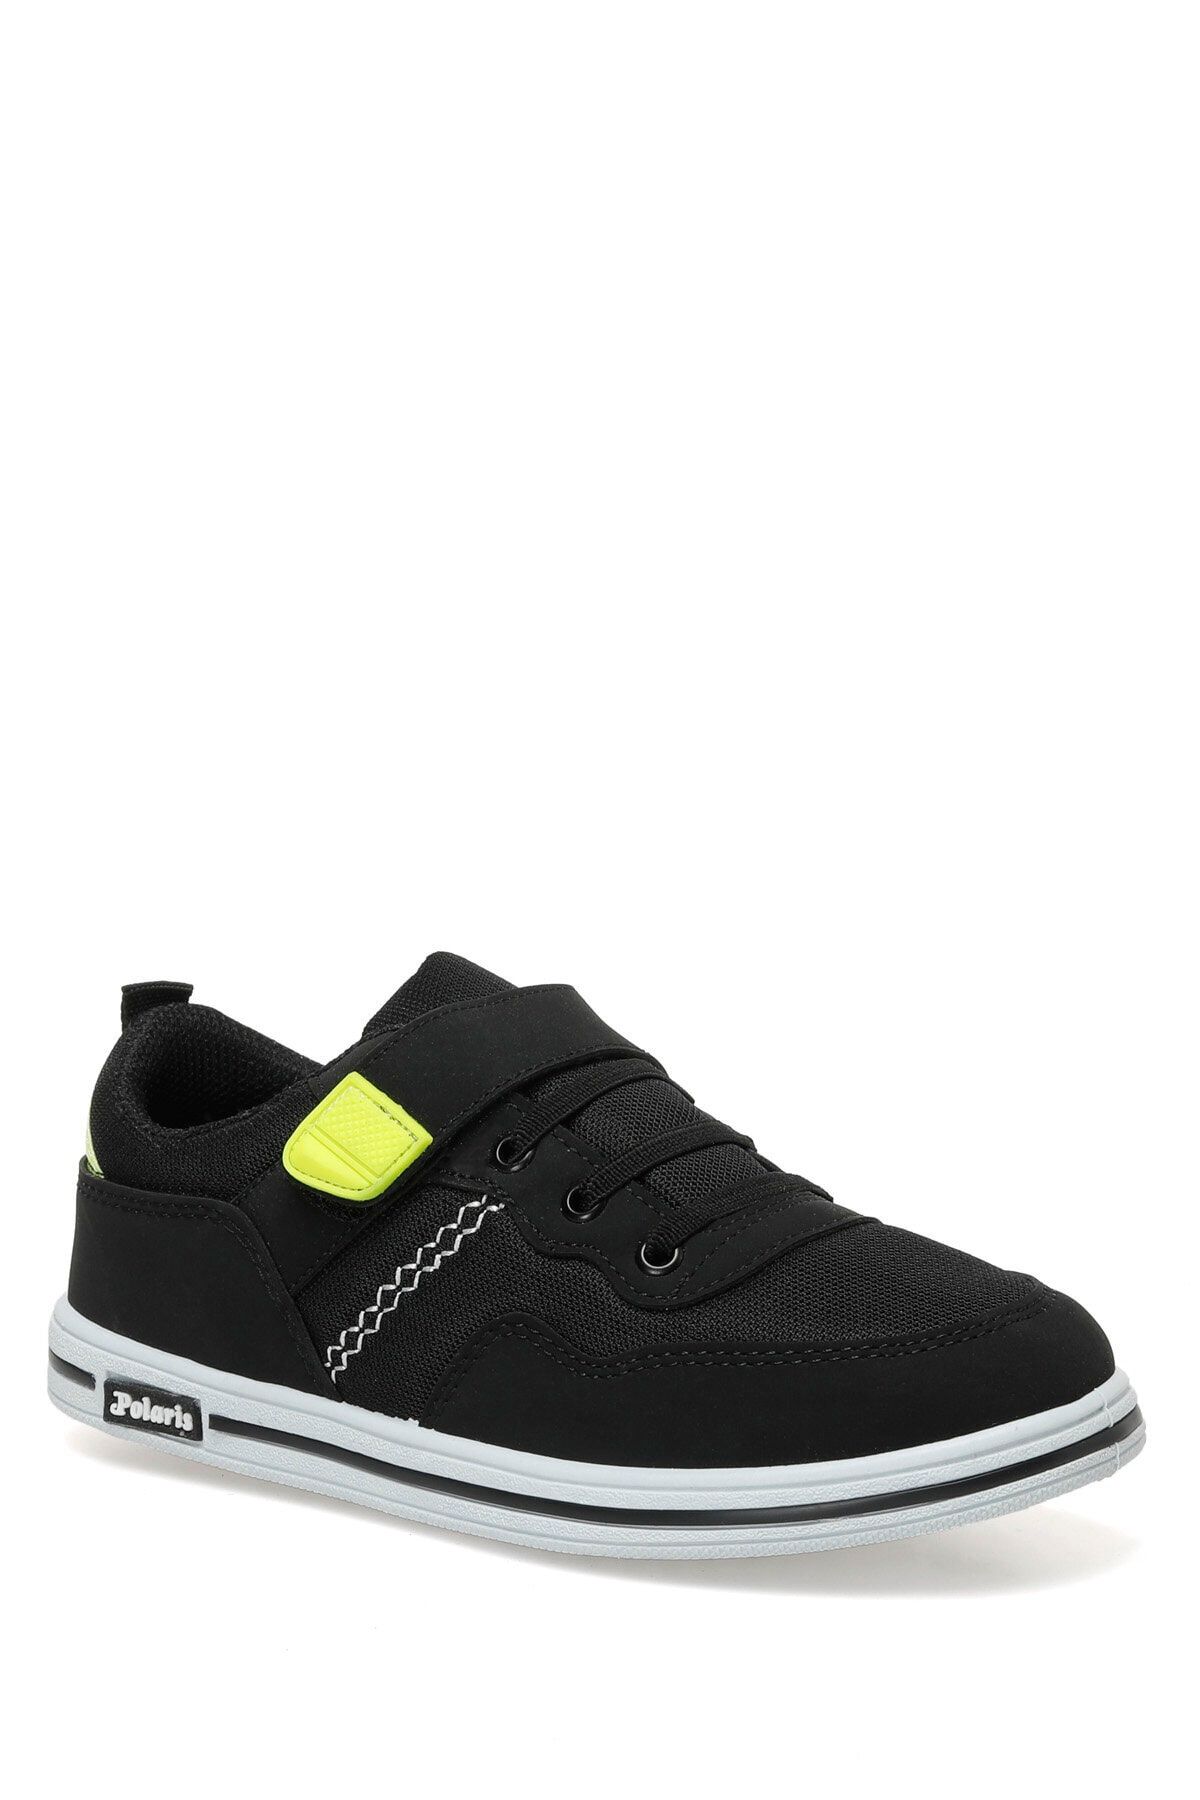 Polaris 512532.g3fx Siyah Erkek Çocuk Sneaker